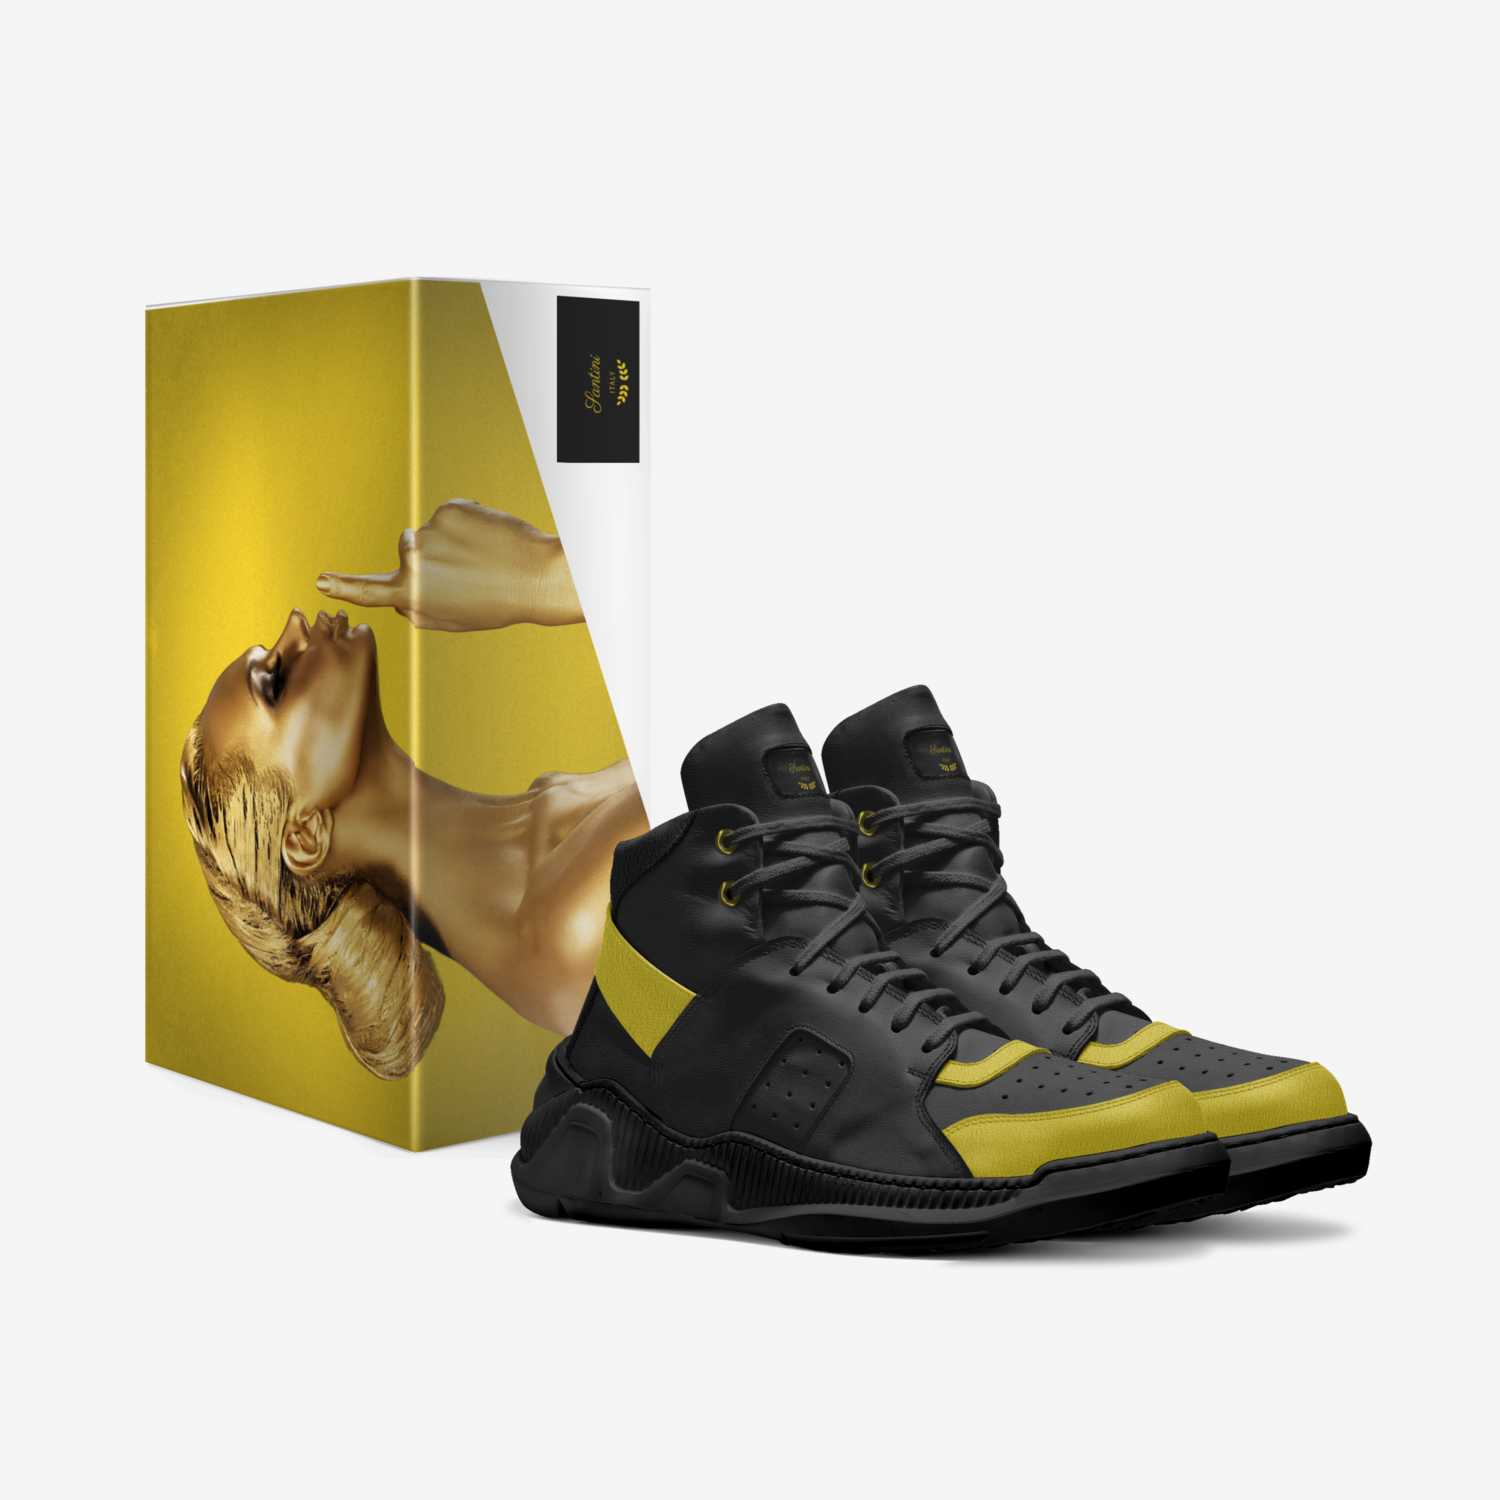 Santini  custom made in Italy shoes by Rafael Santana | Box view